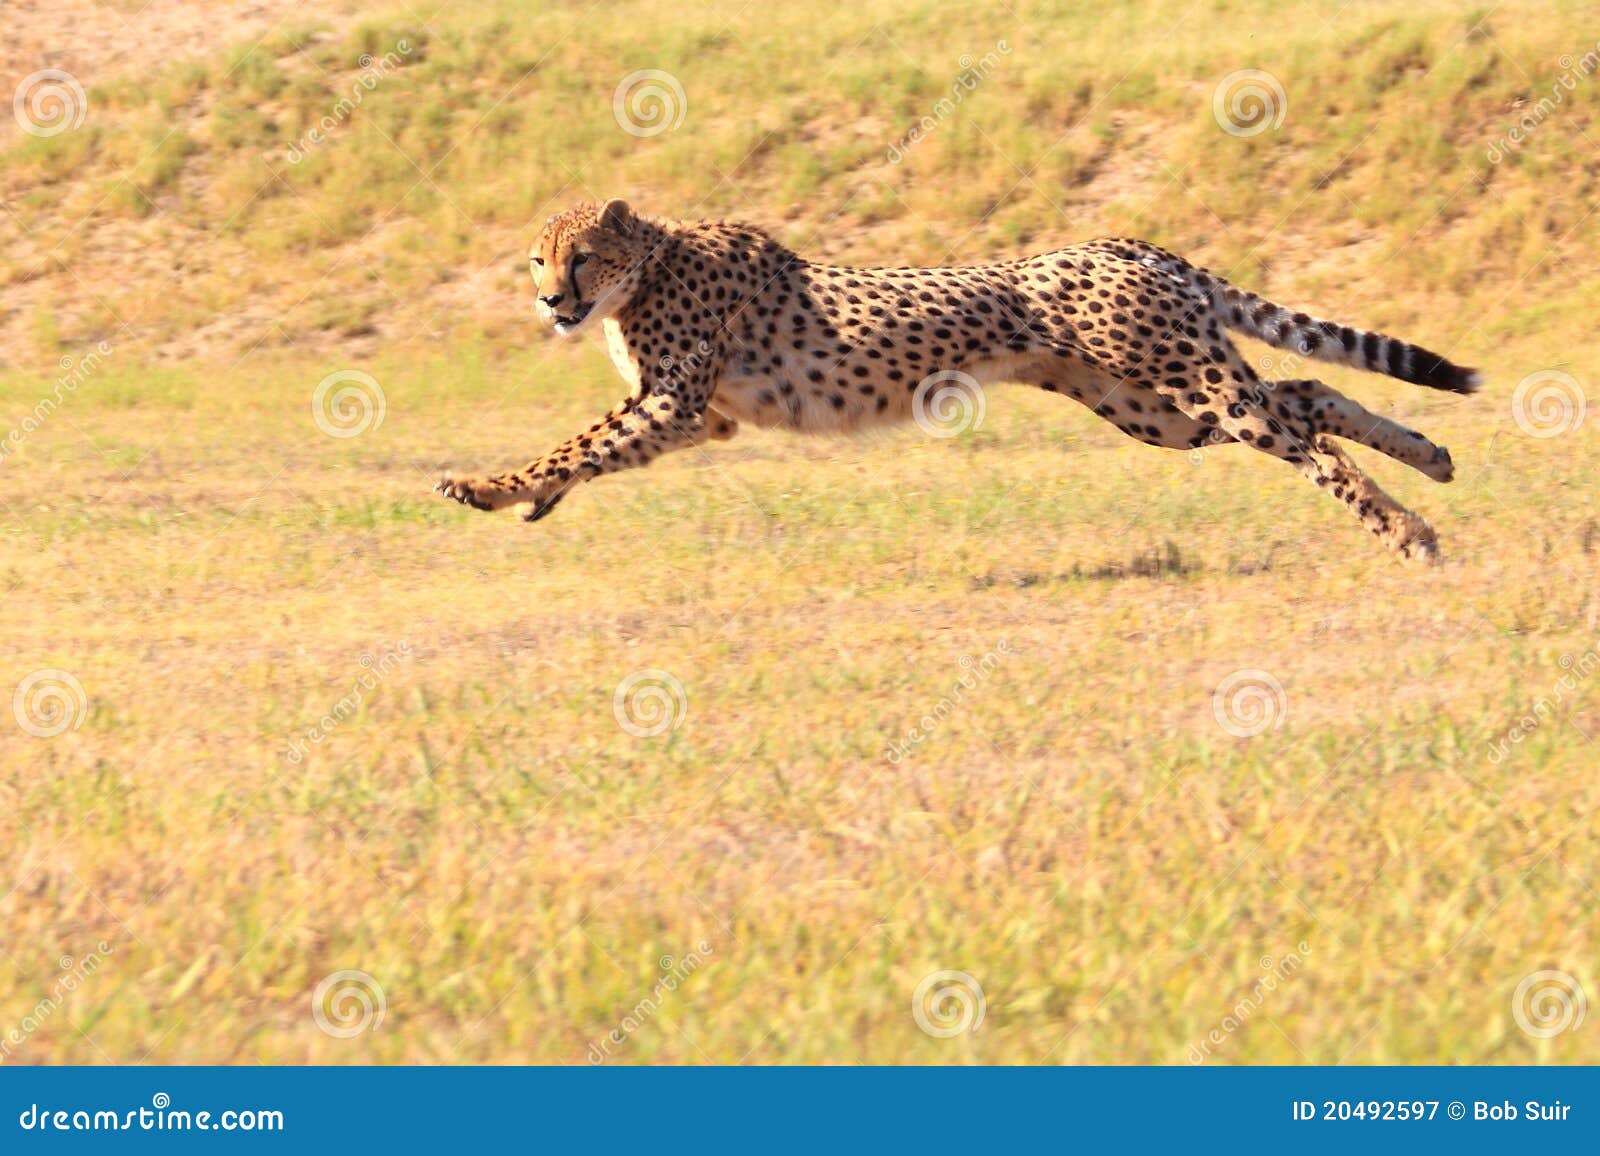 Cheetah Running Fast Royalty Free Stock Photography  Image: 20492597